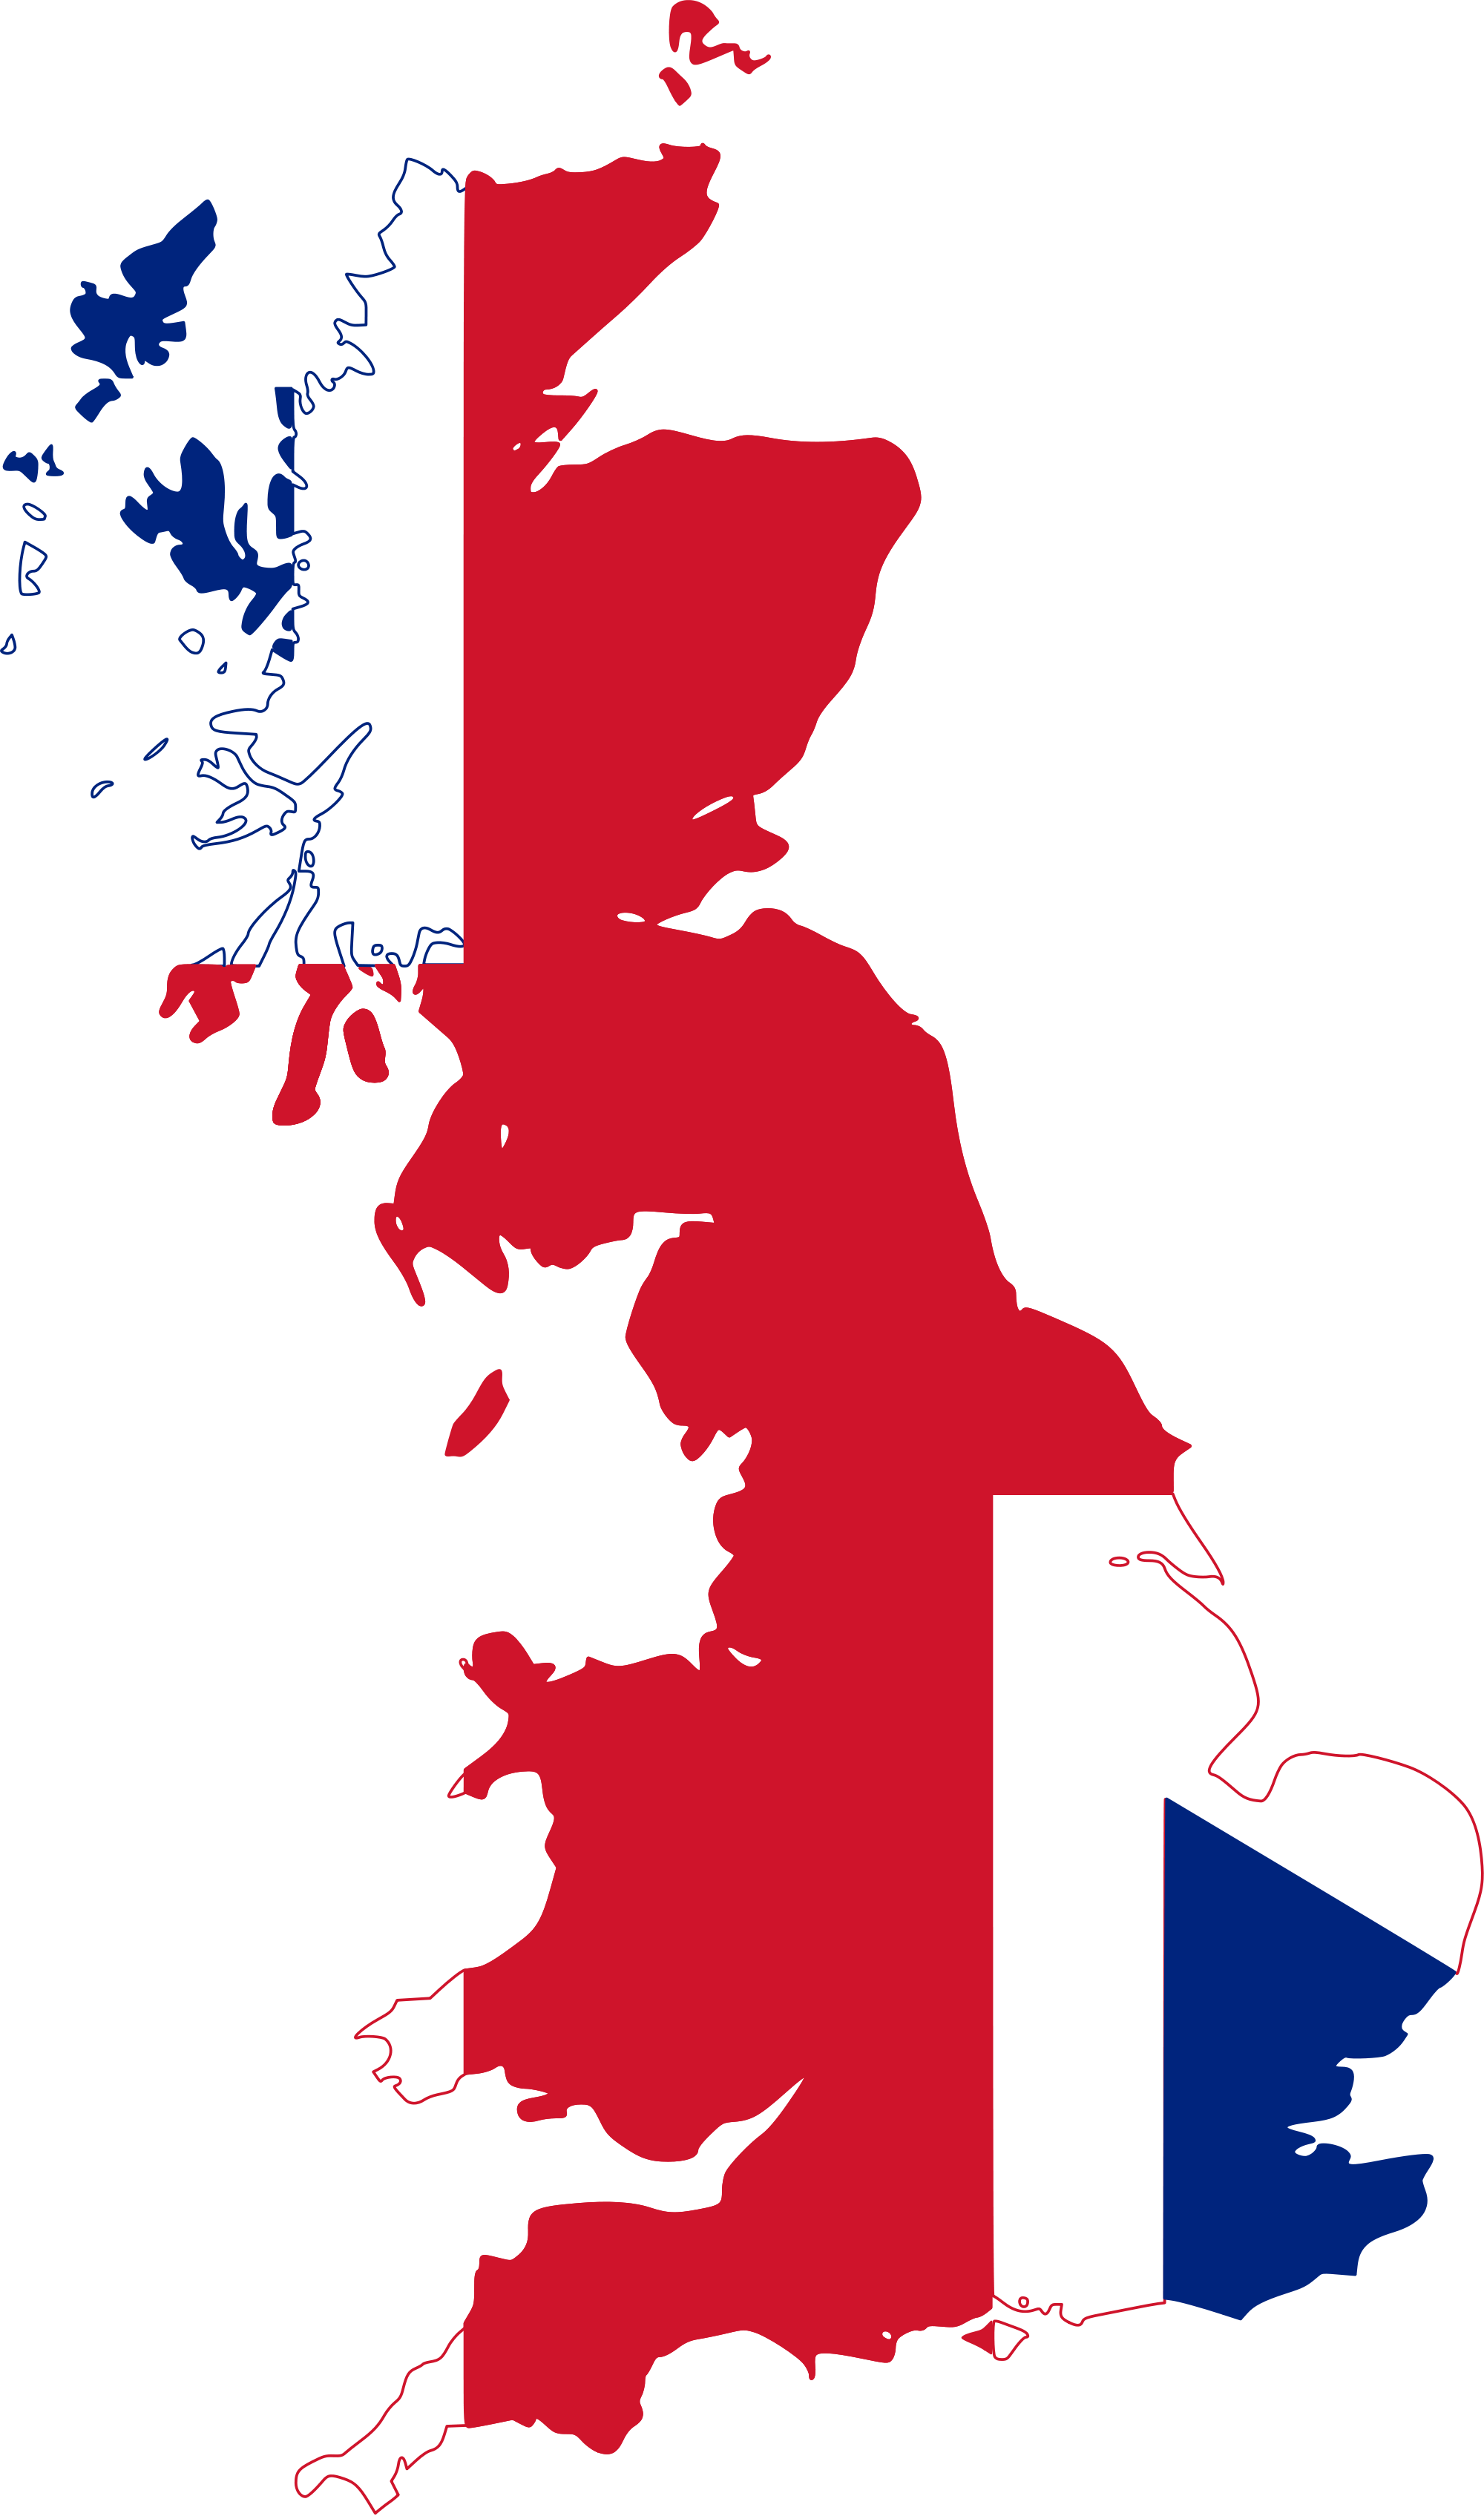 Территория Британии. Карта Великобритании. Карта Великобритании без фона. Великобритания силуэт страны. Uk territory